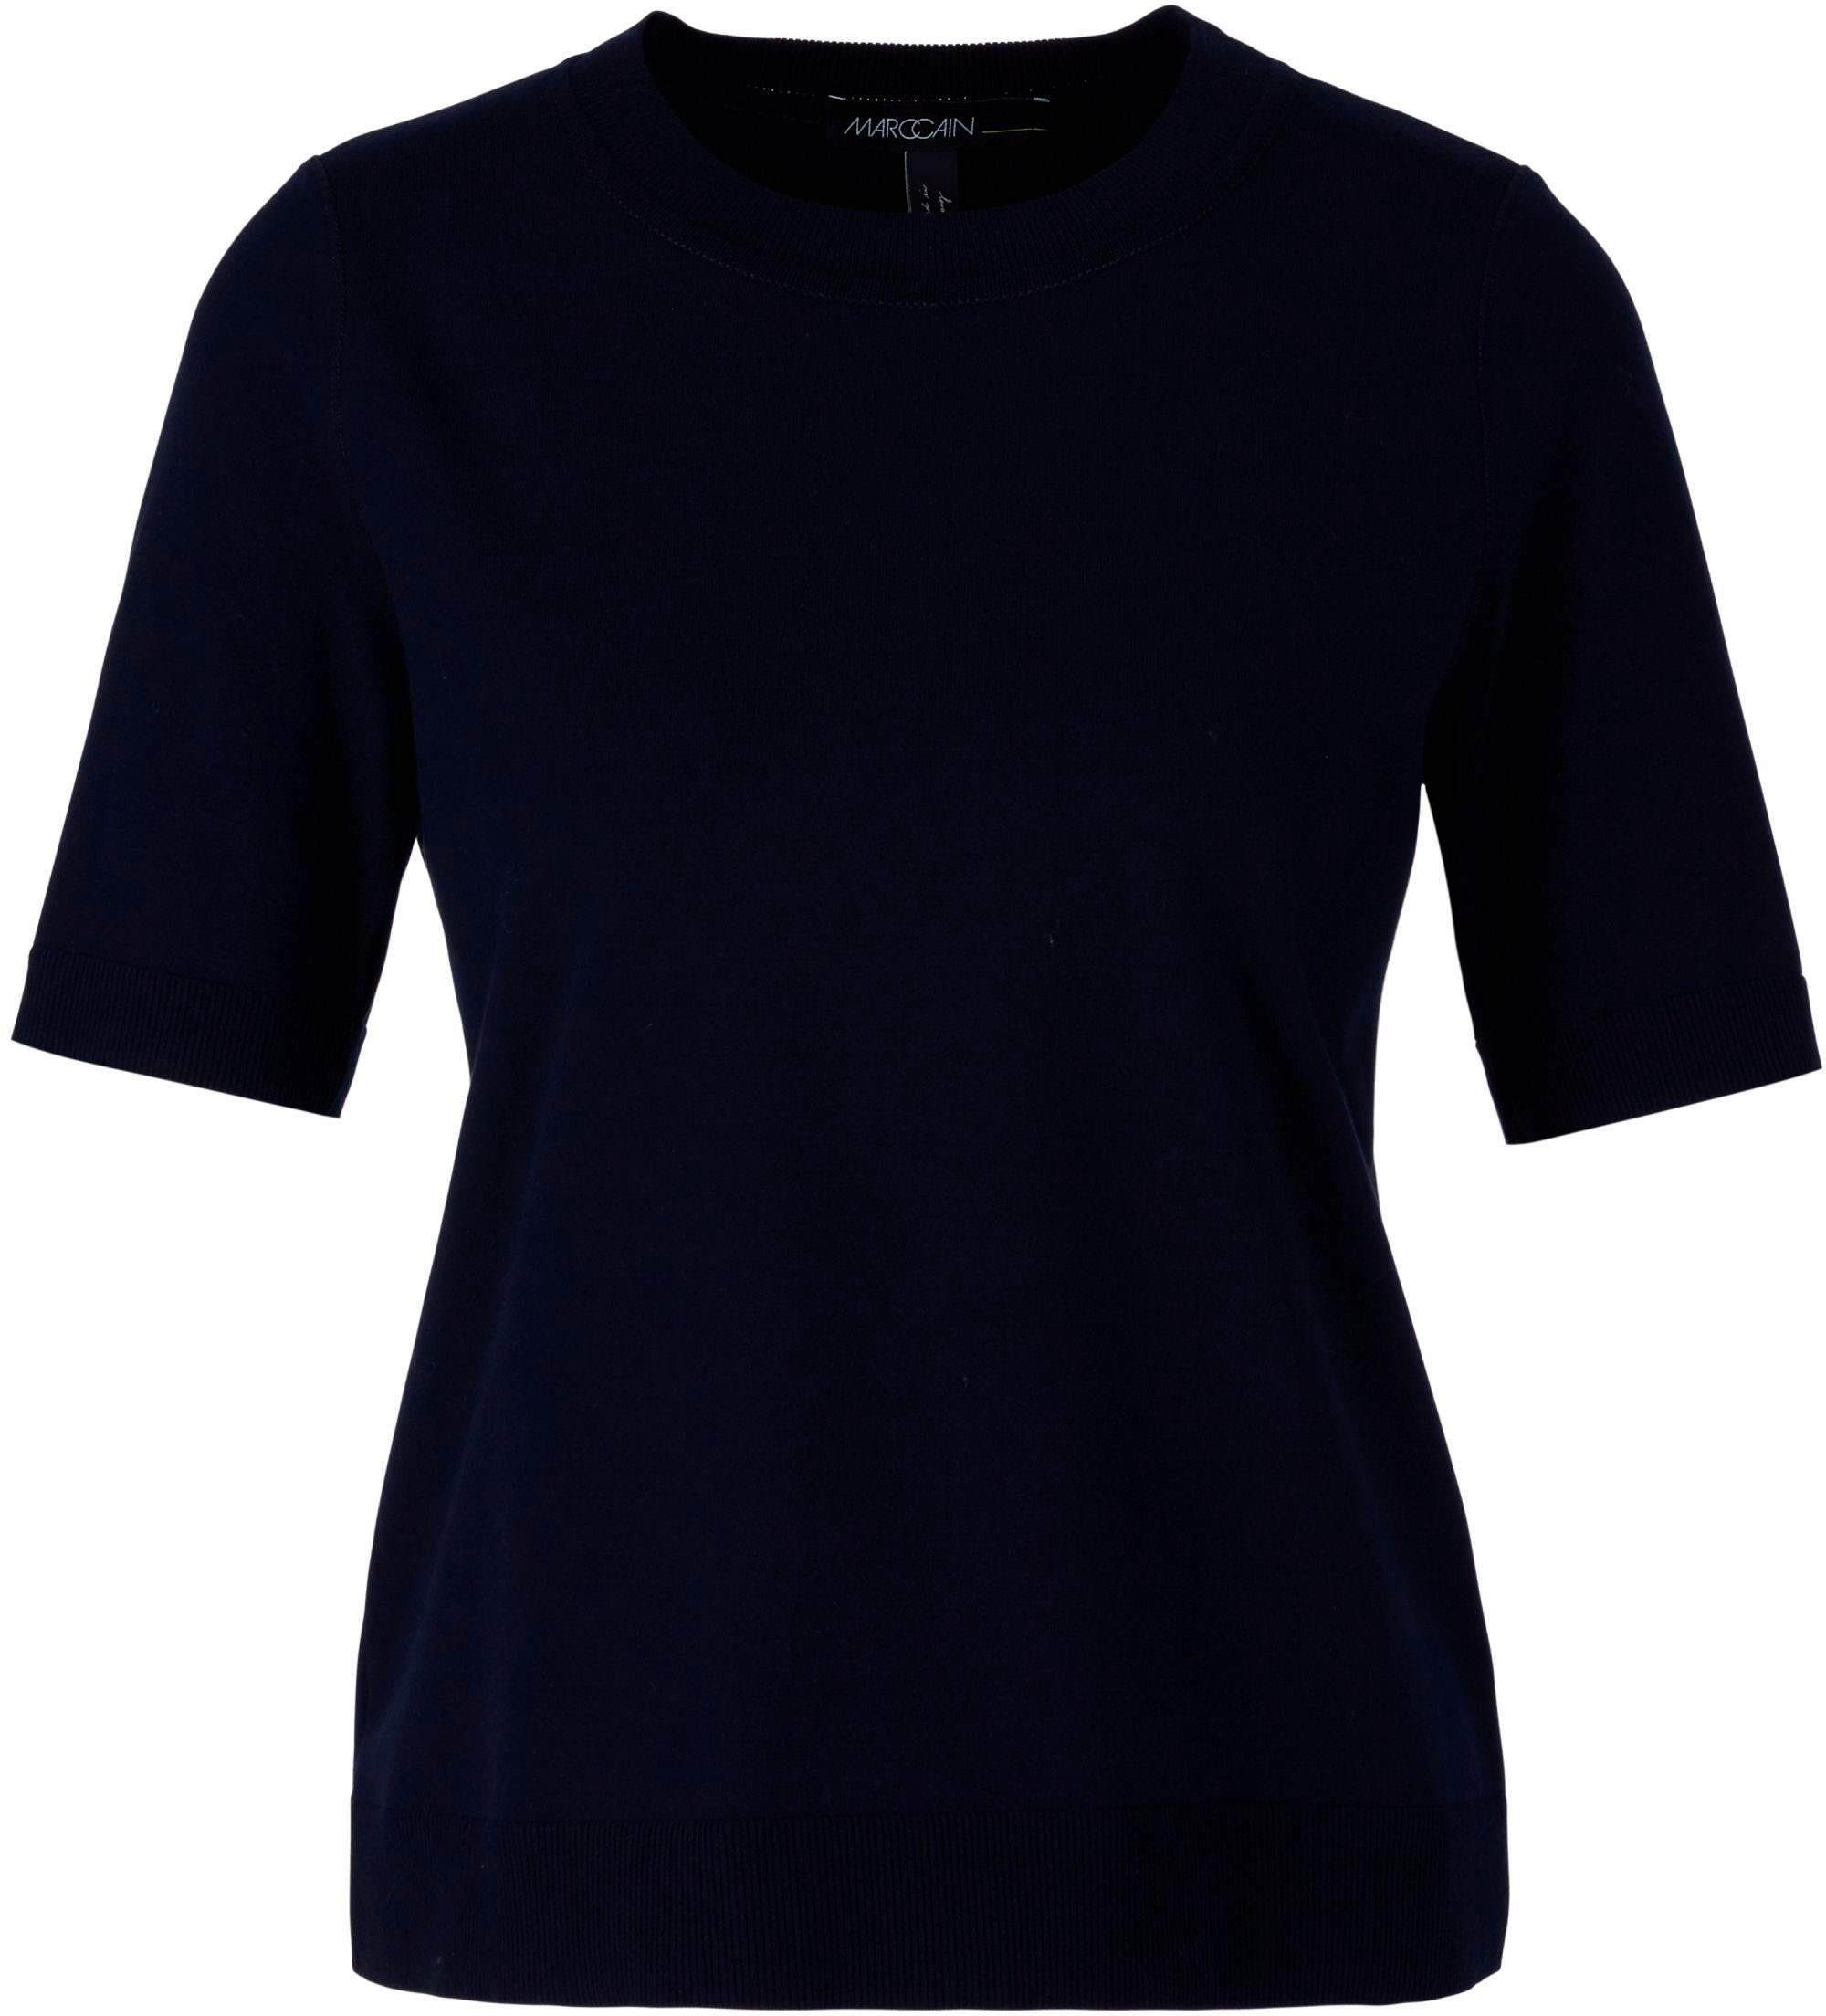 Essential" "Collection Damenmode Pullover "Rethink midnight Cain Rundhalspullover blue Together" Premium Marc